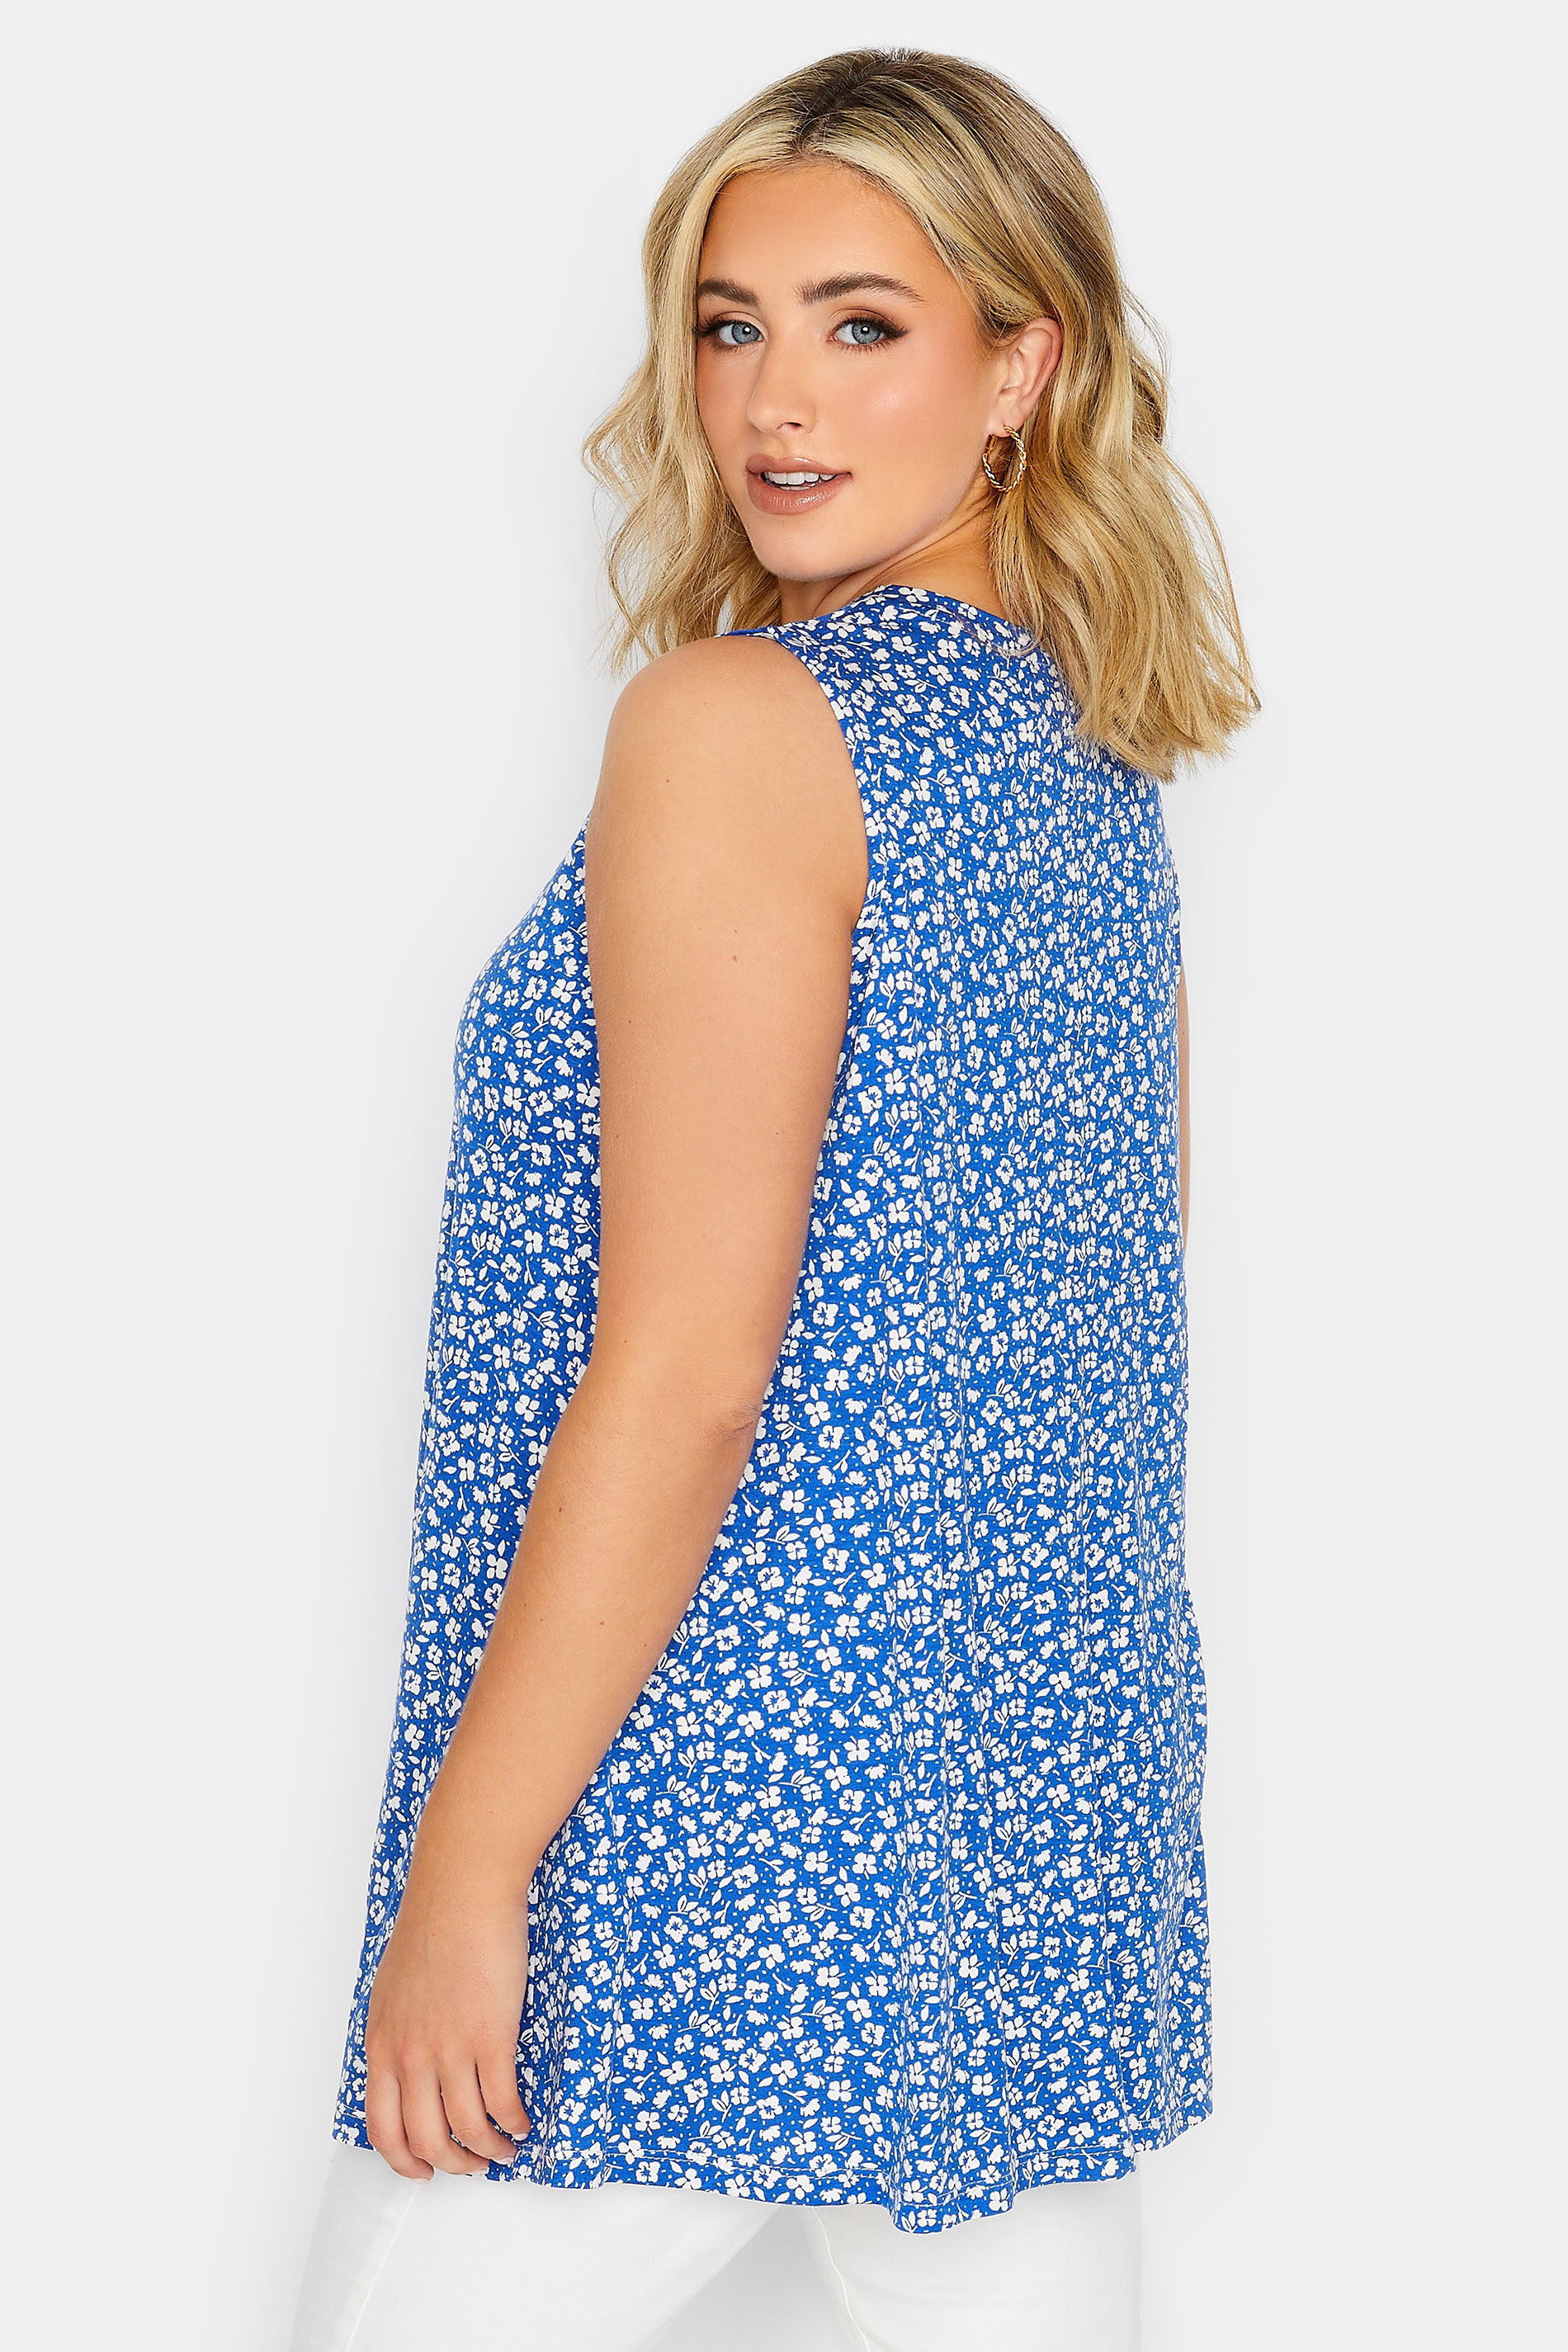 YOURS Plus Size Blue Floral Print Pleat Front Vest Top | Yours Clothing 3